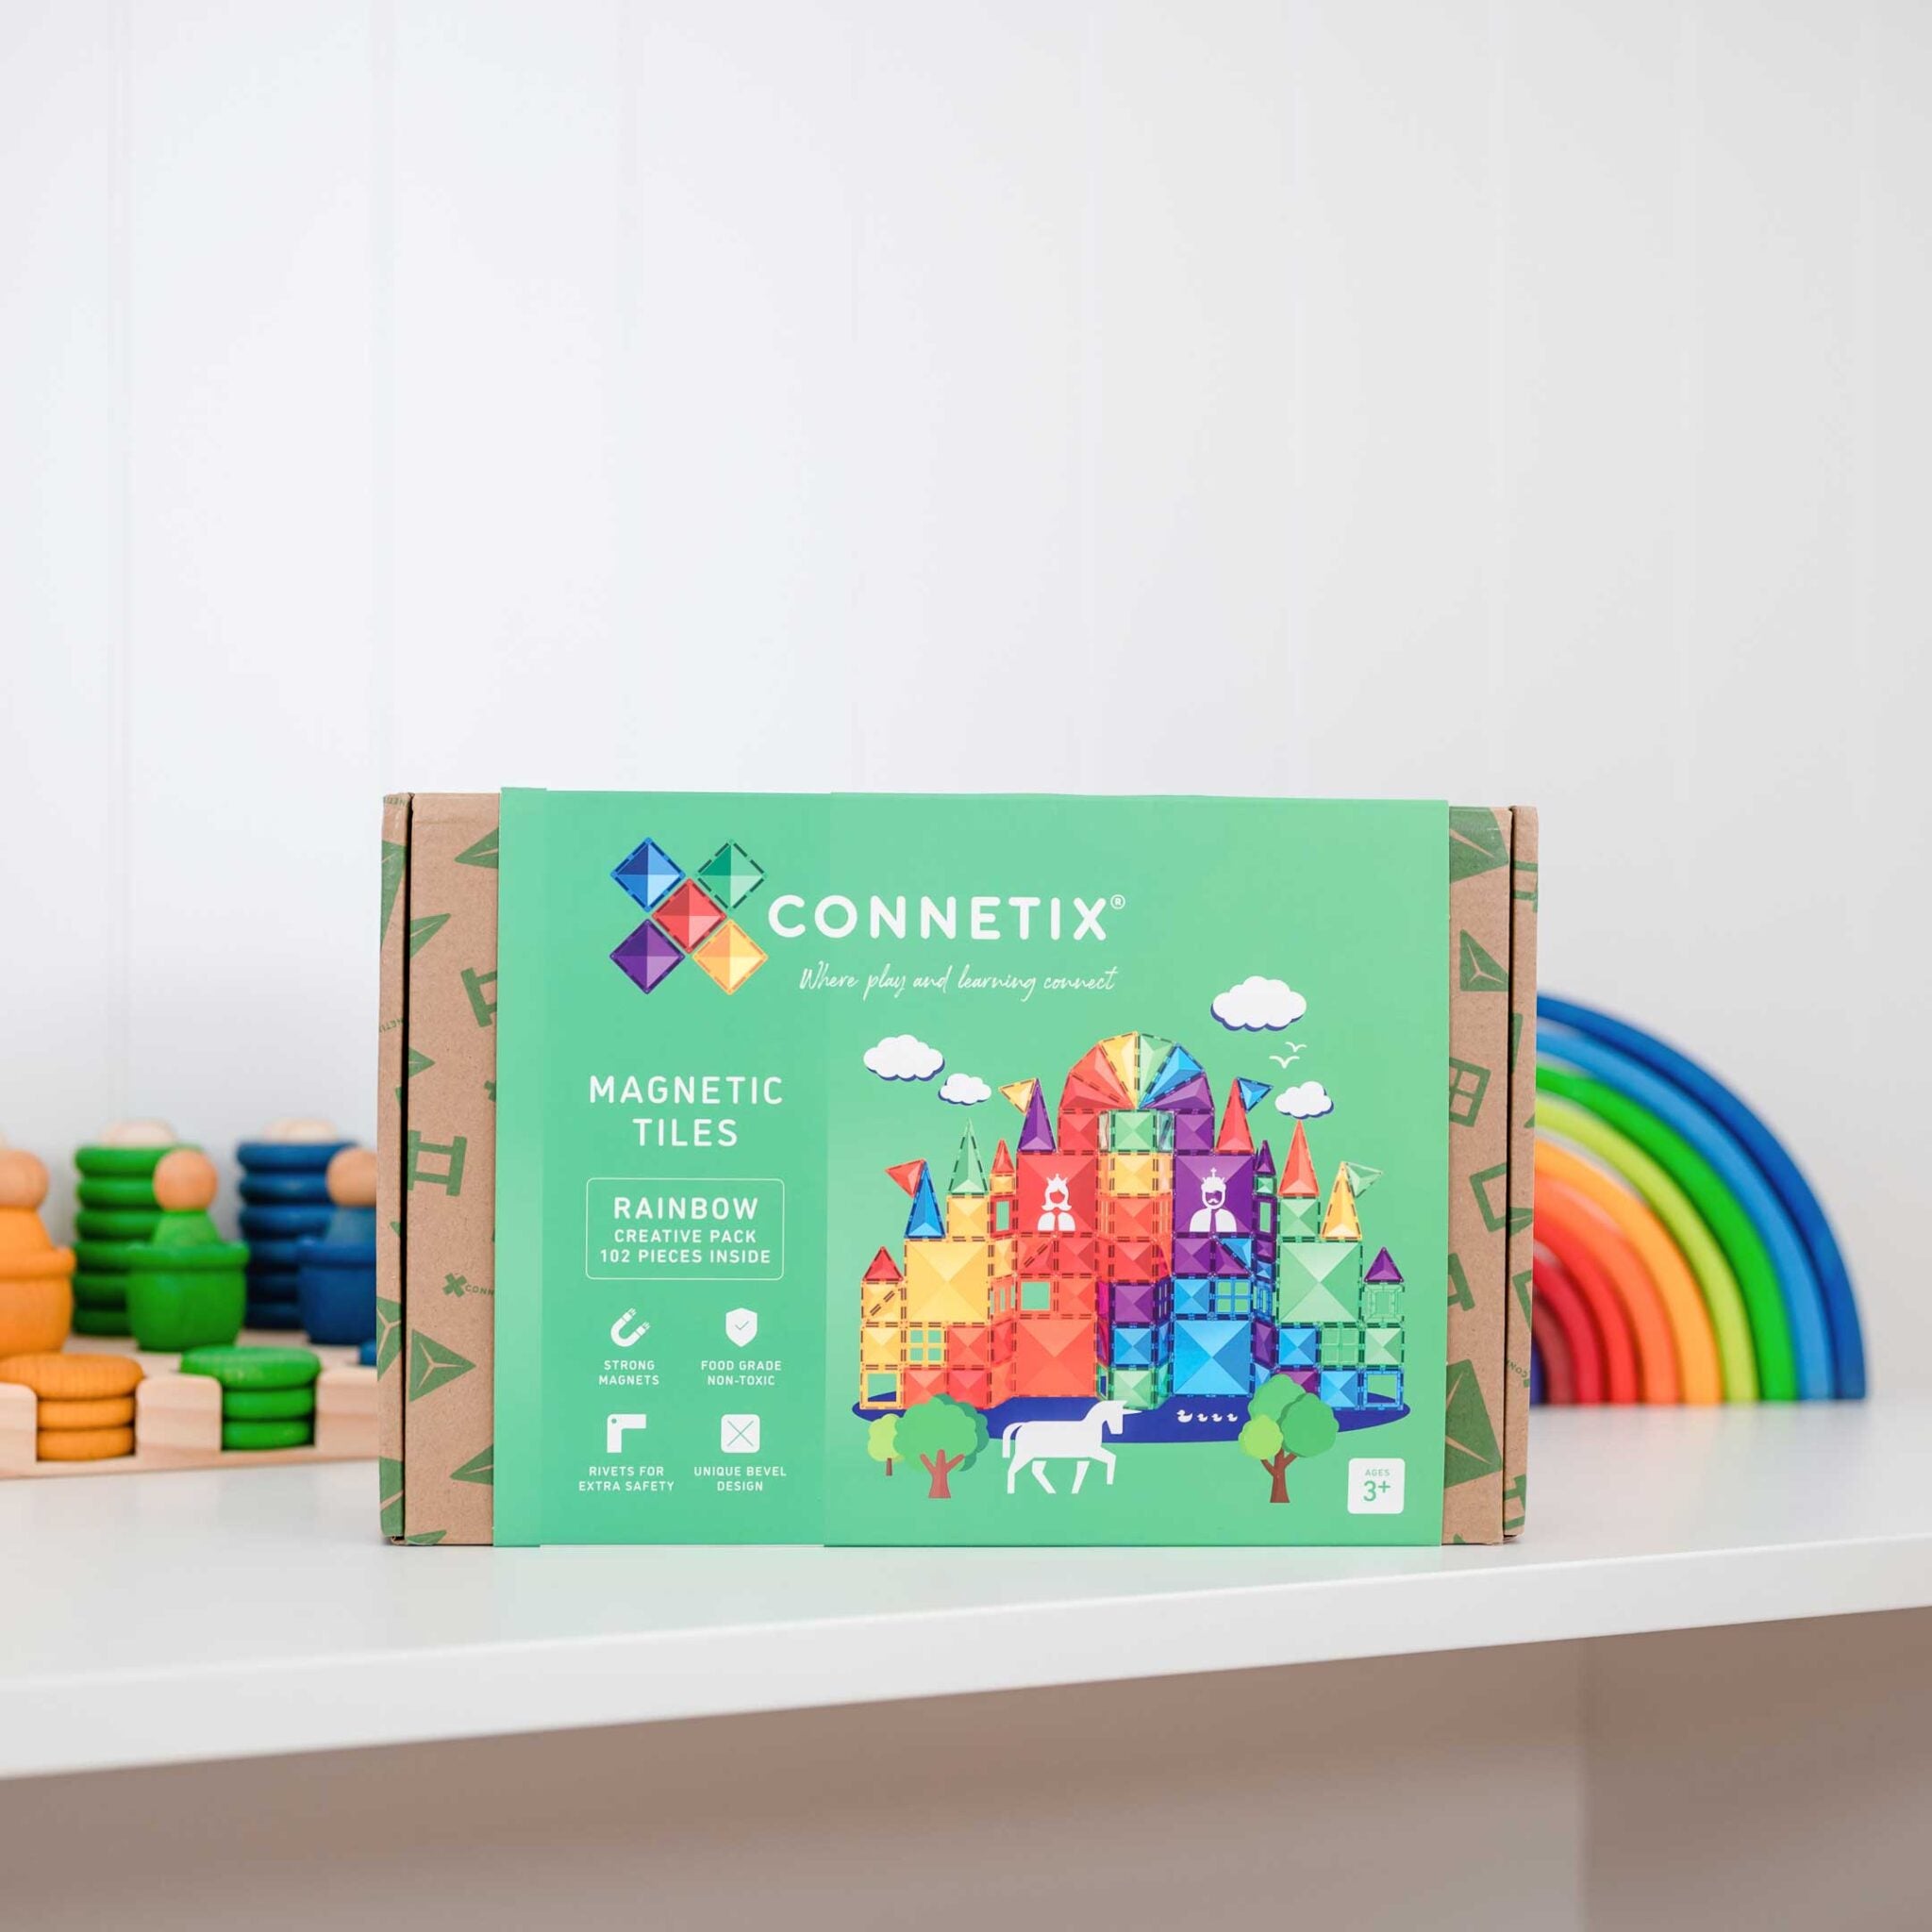 Connetix |Rainbow Rectangle Pack 18Pc